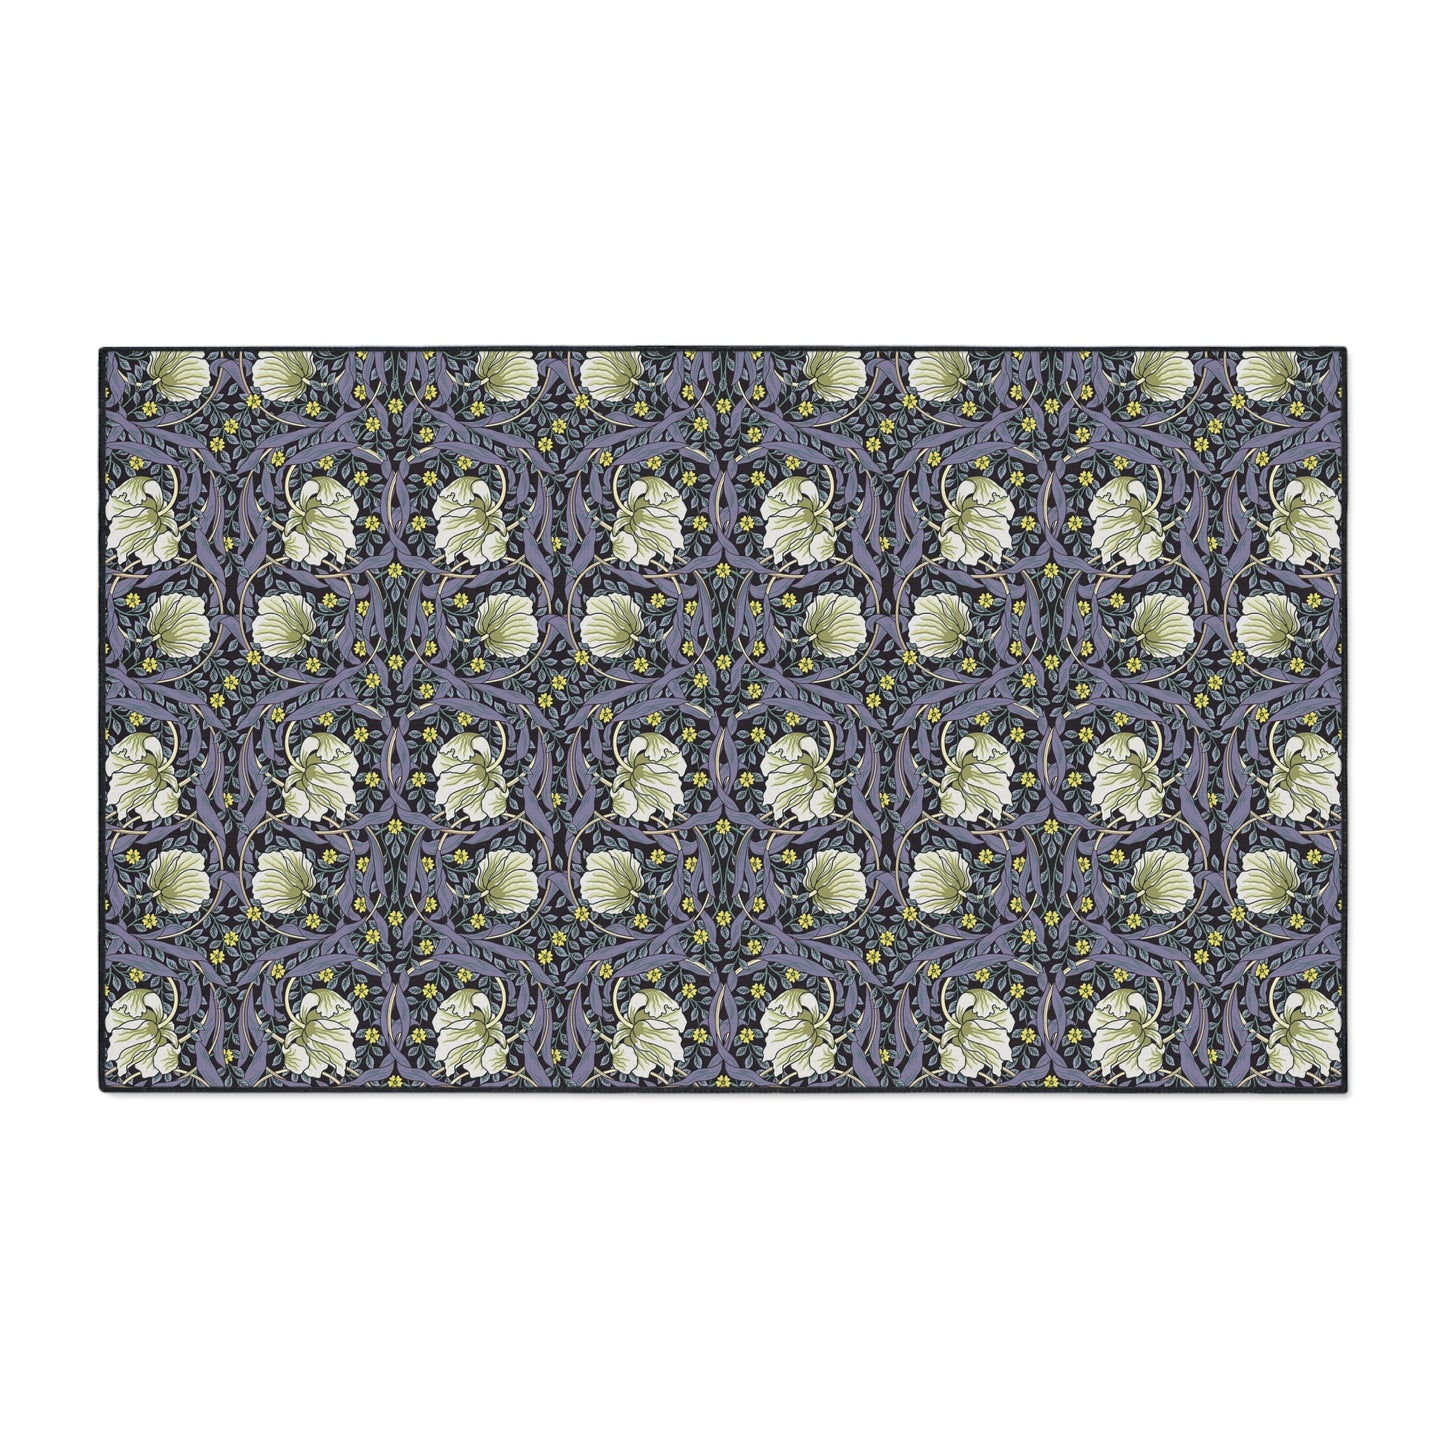 william-morris-co-heavy-duty-floor-mat-floor-mat-pimpernel-collection-lavender-4